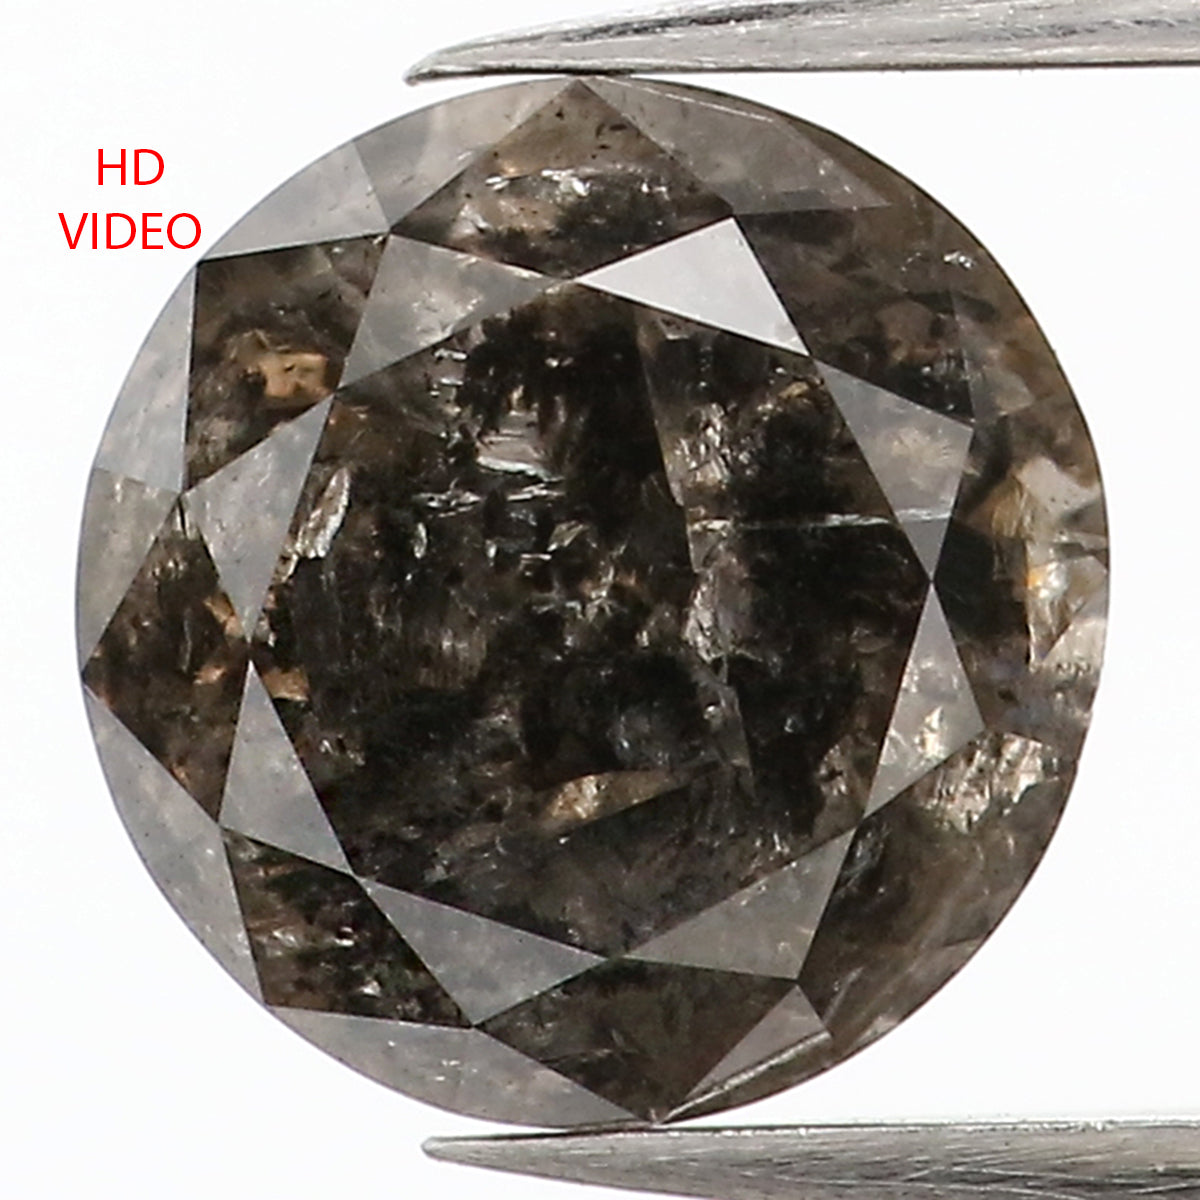 1.33 Ct Natural Loose Round Shape Diamond Black Round Cut Diamond 6.80 MM Natural Loose Diamond Brown Round Brilliant Cut Diamond LQ999